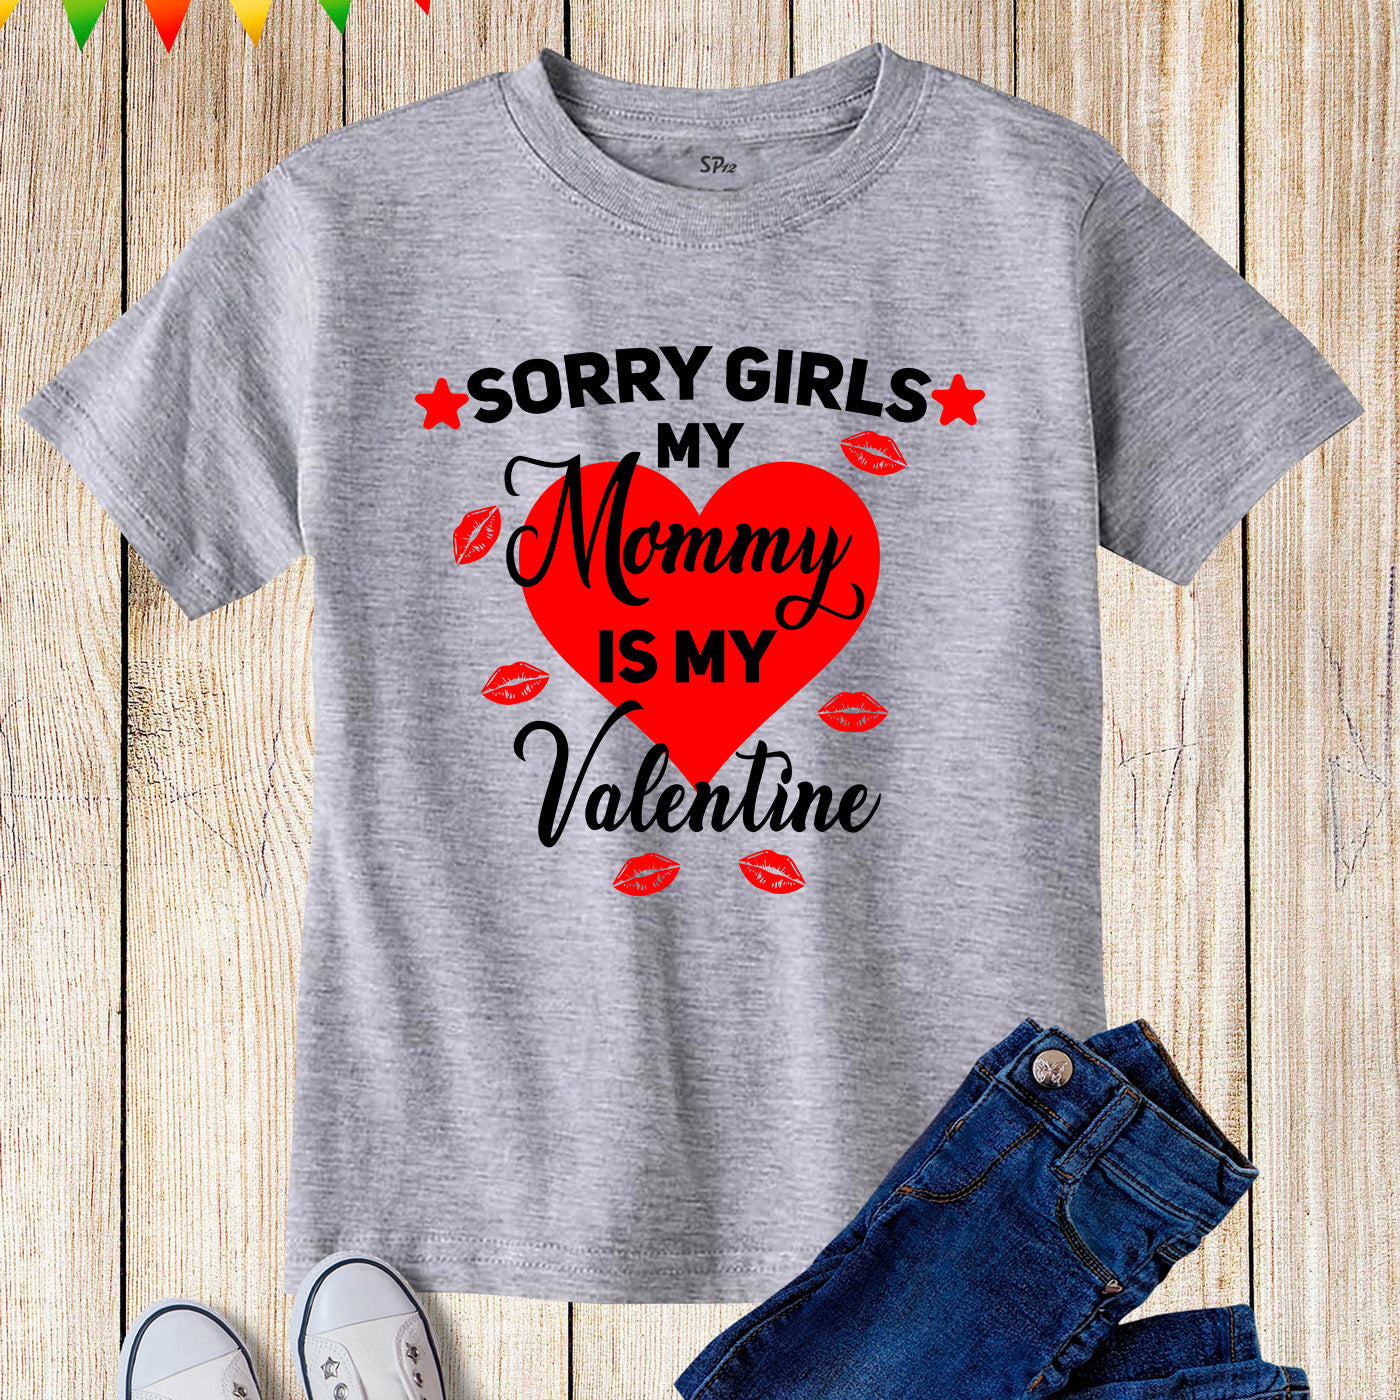 Sorry Girls My Mommy is My Valentine Toddler Boys T Shirt